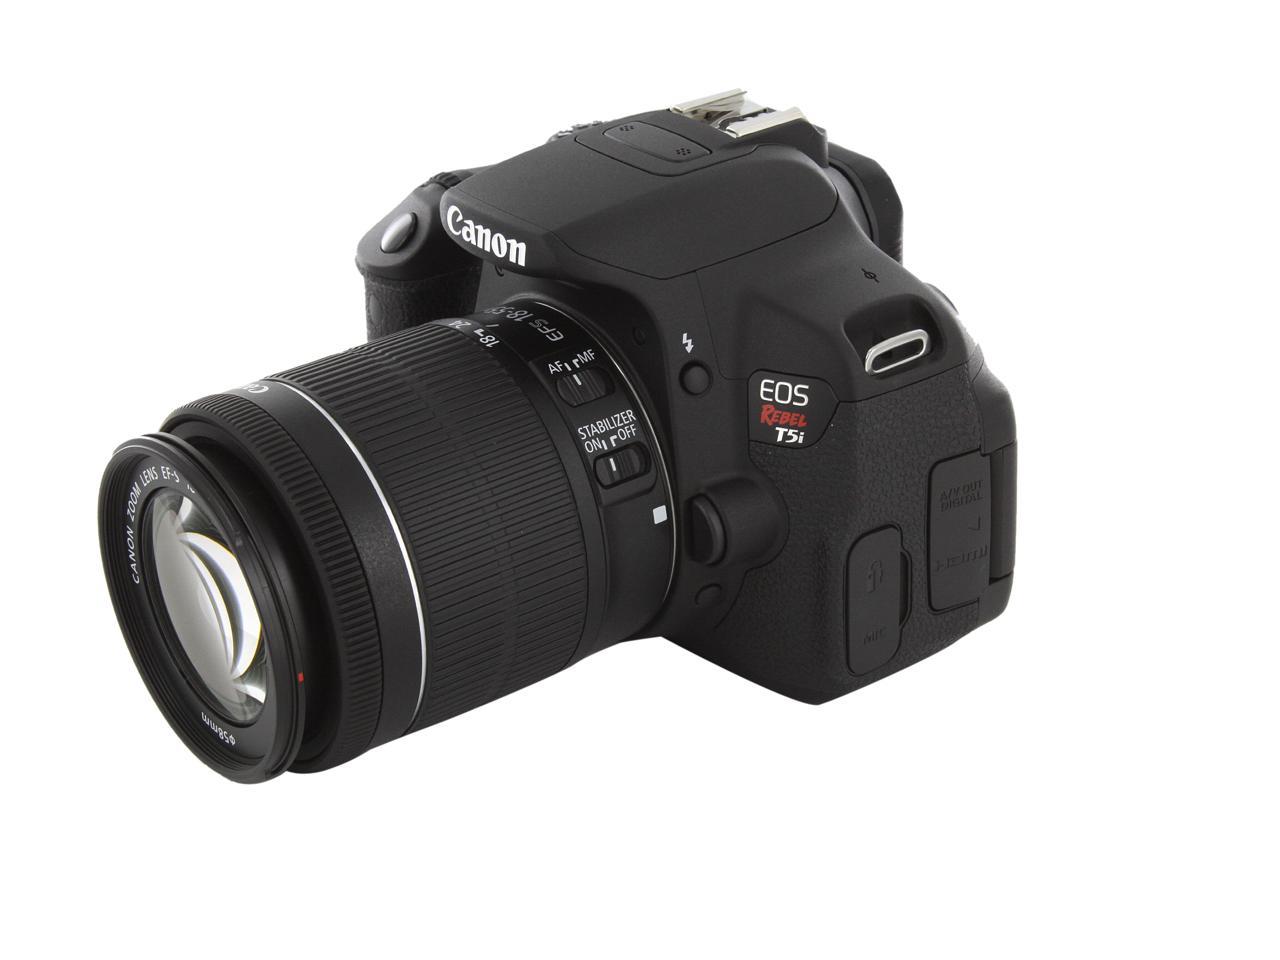 Canon EOS Rebel T5i 8595B003 Black Digital SLR Camera with